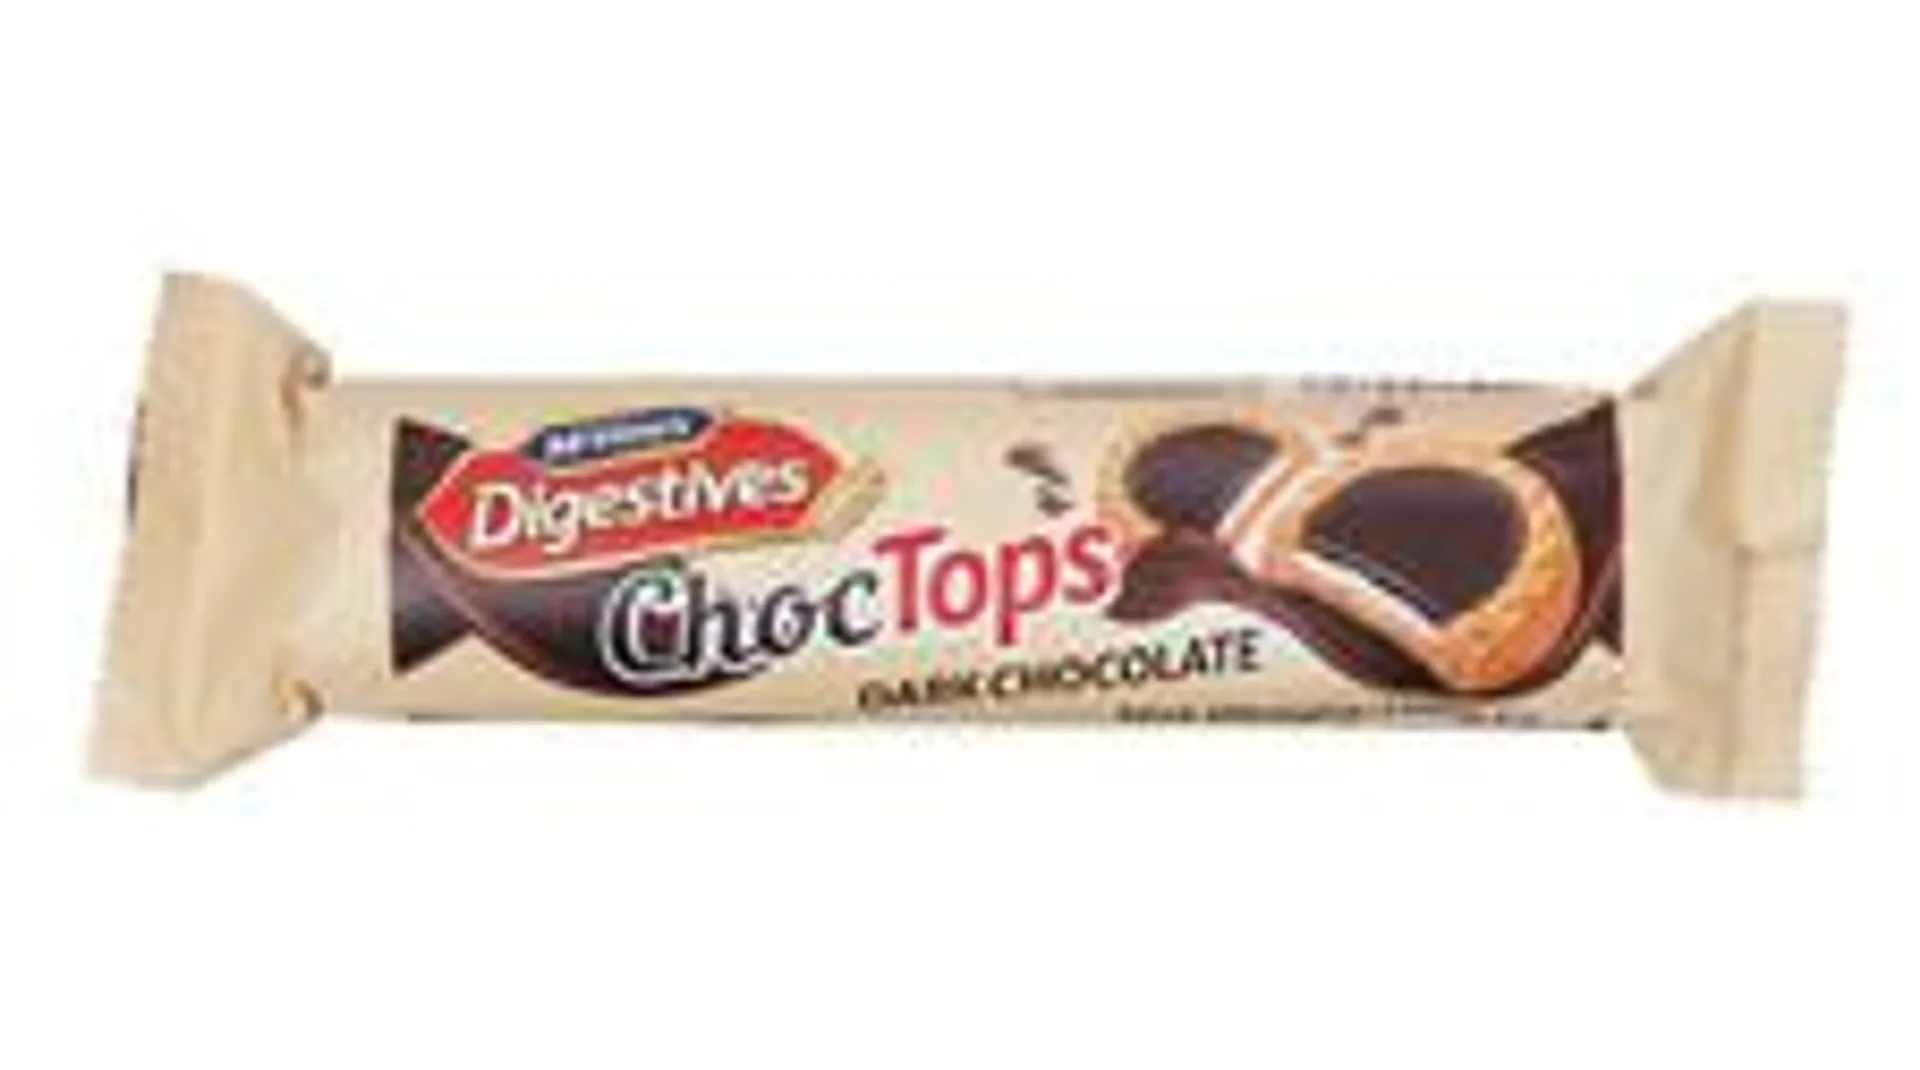 McVitie's Digestives Choc Tops Dark Chocolate 100g